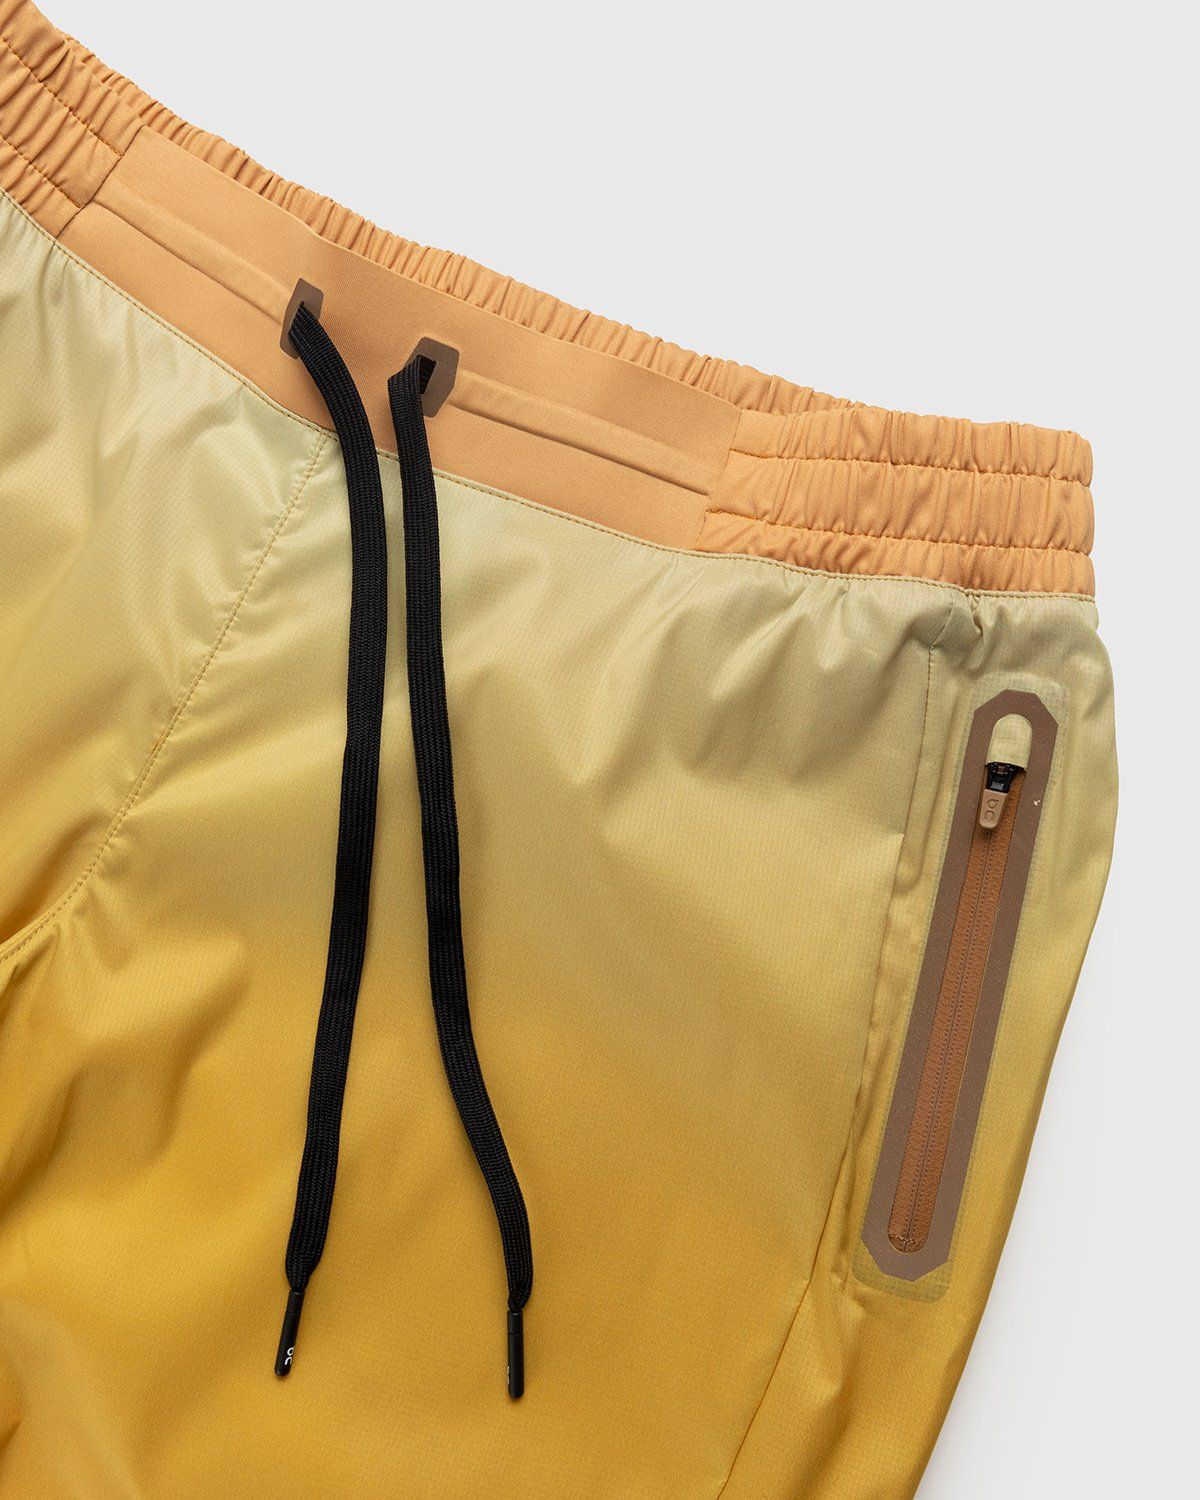 Loewe x On – Women's Technical Running Pants Gradient Orange - Active Pants - Orange - Image 5